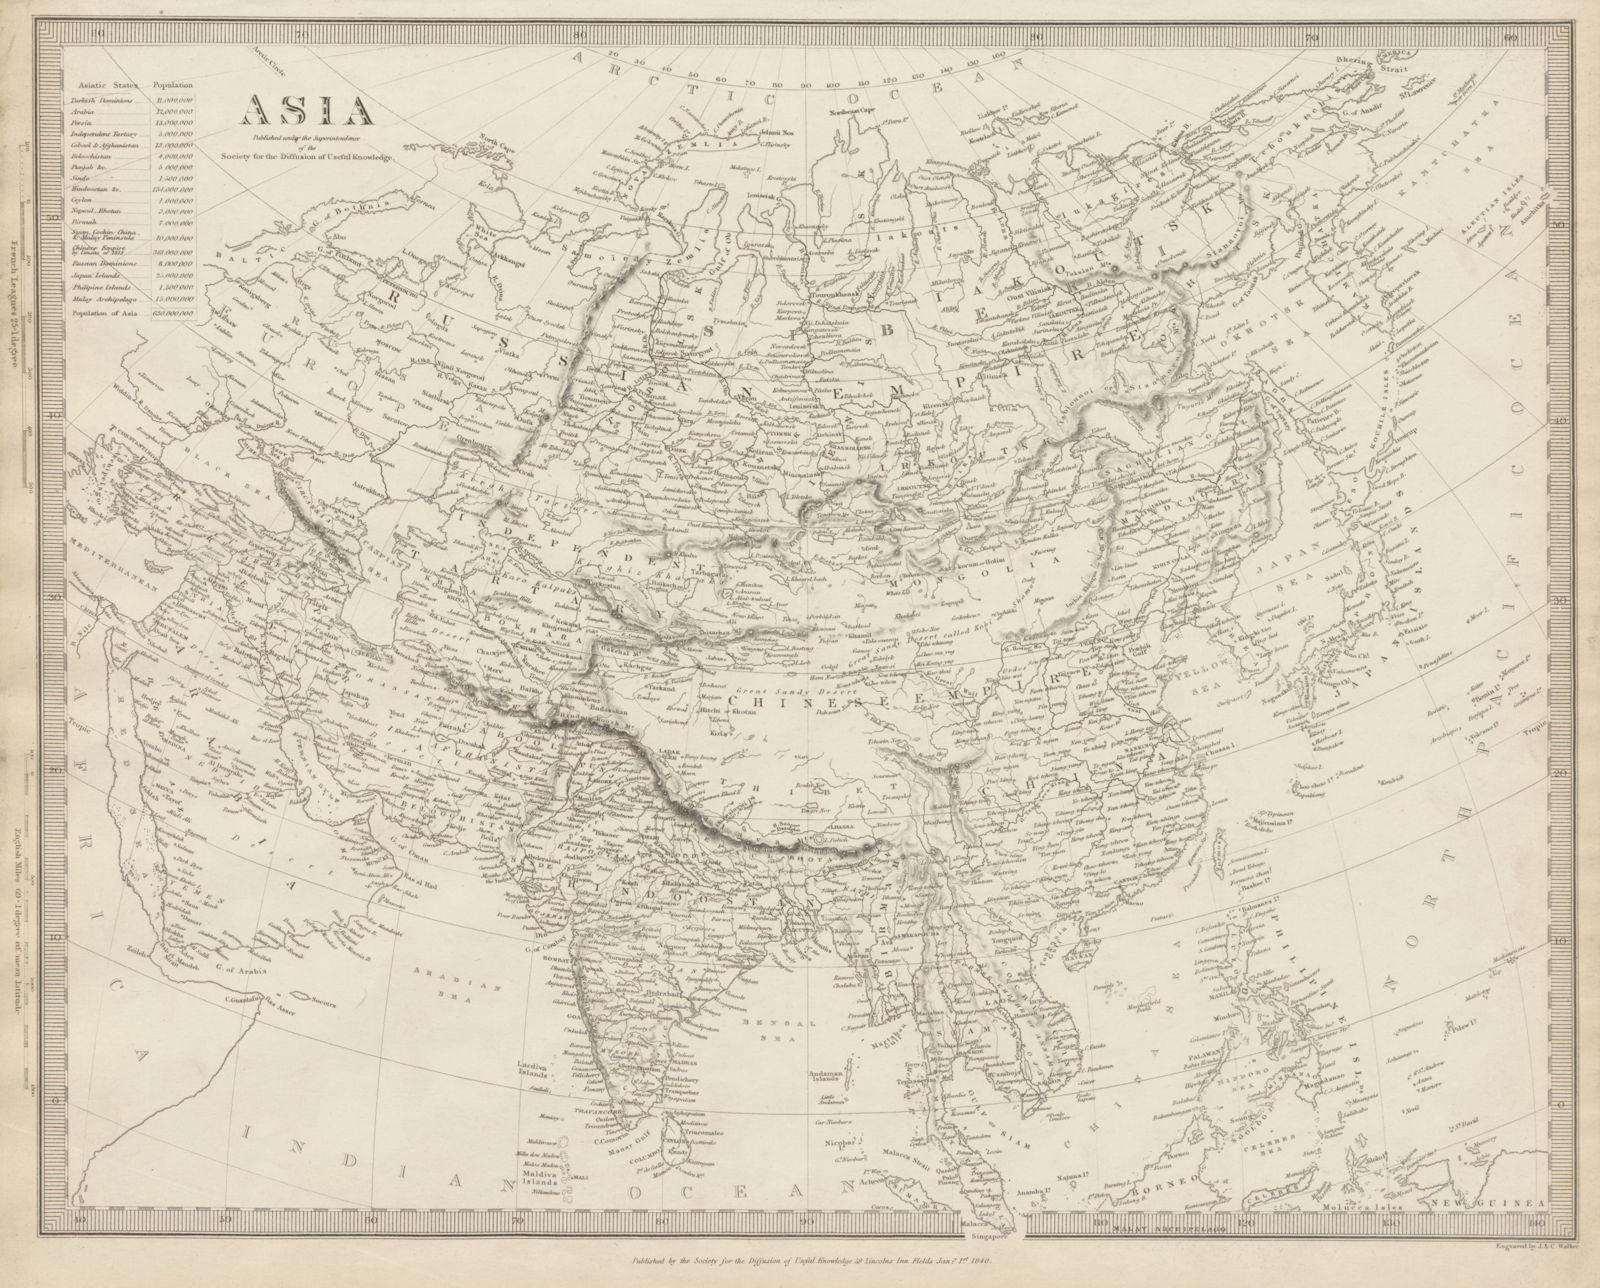 ASIA. Arabia India Persia Siam Cochinchina Tartary. Population. SDUK 1844 map